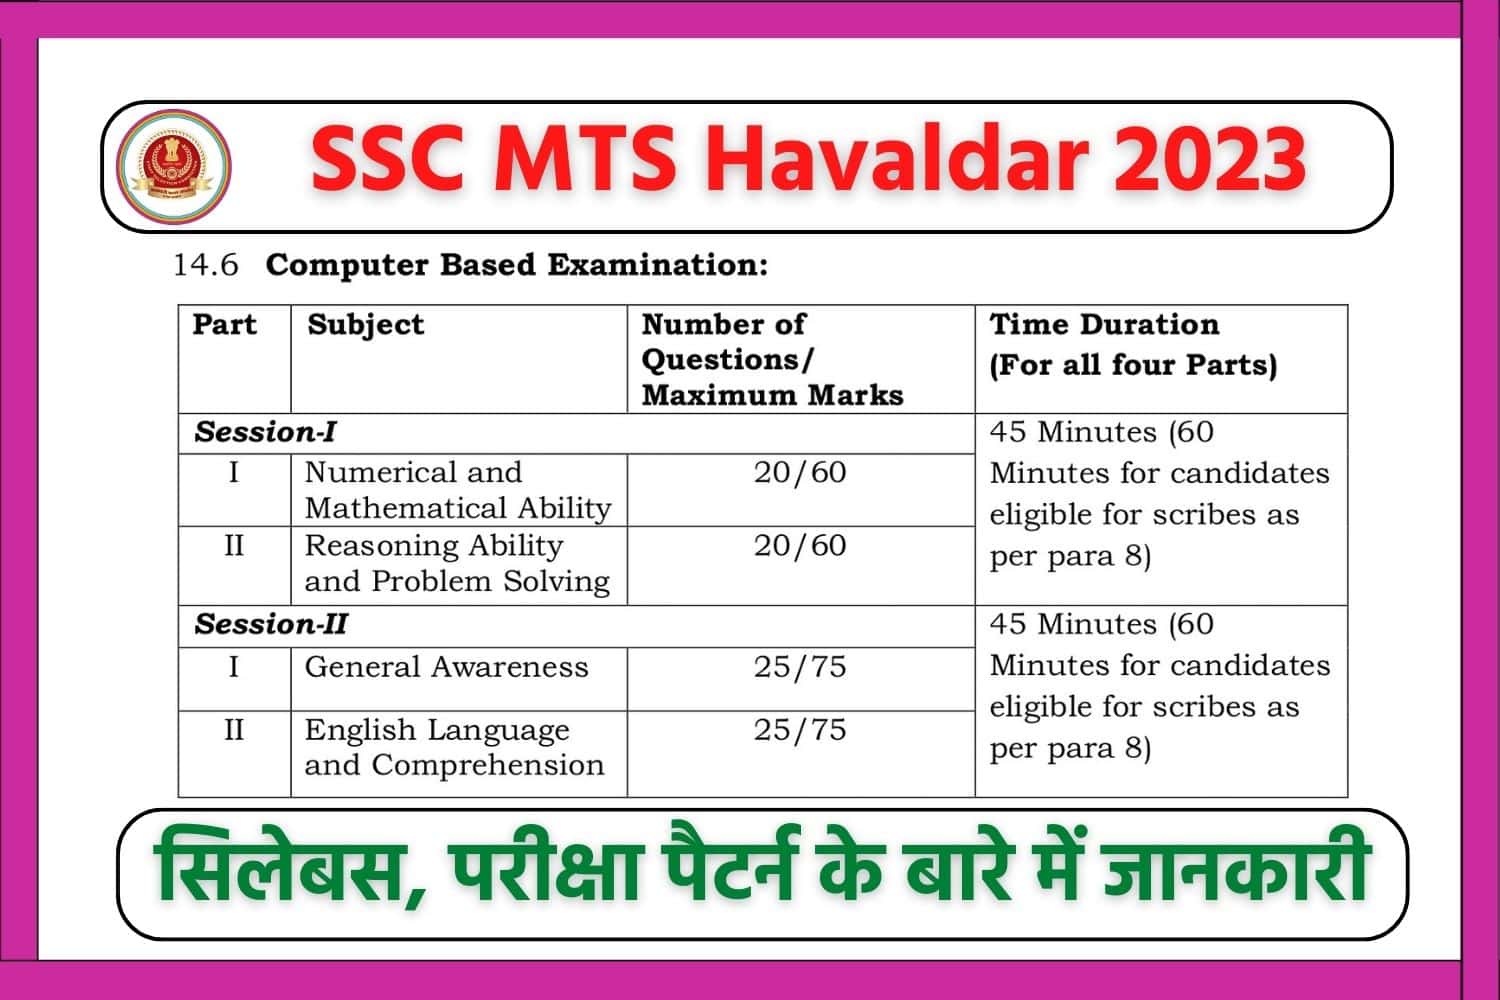 SSC MTS Havaldar Syllabus And Exam Pattern 2023 In Hindi